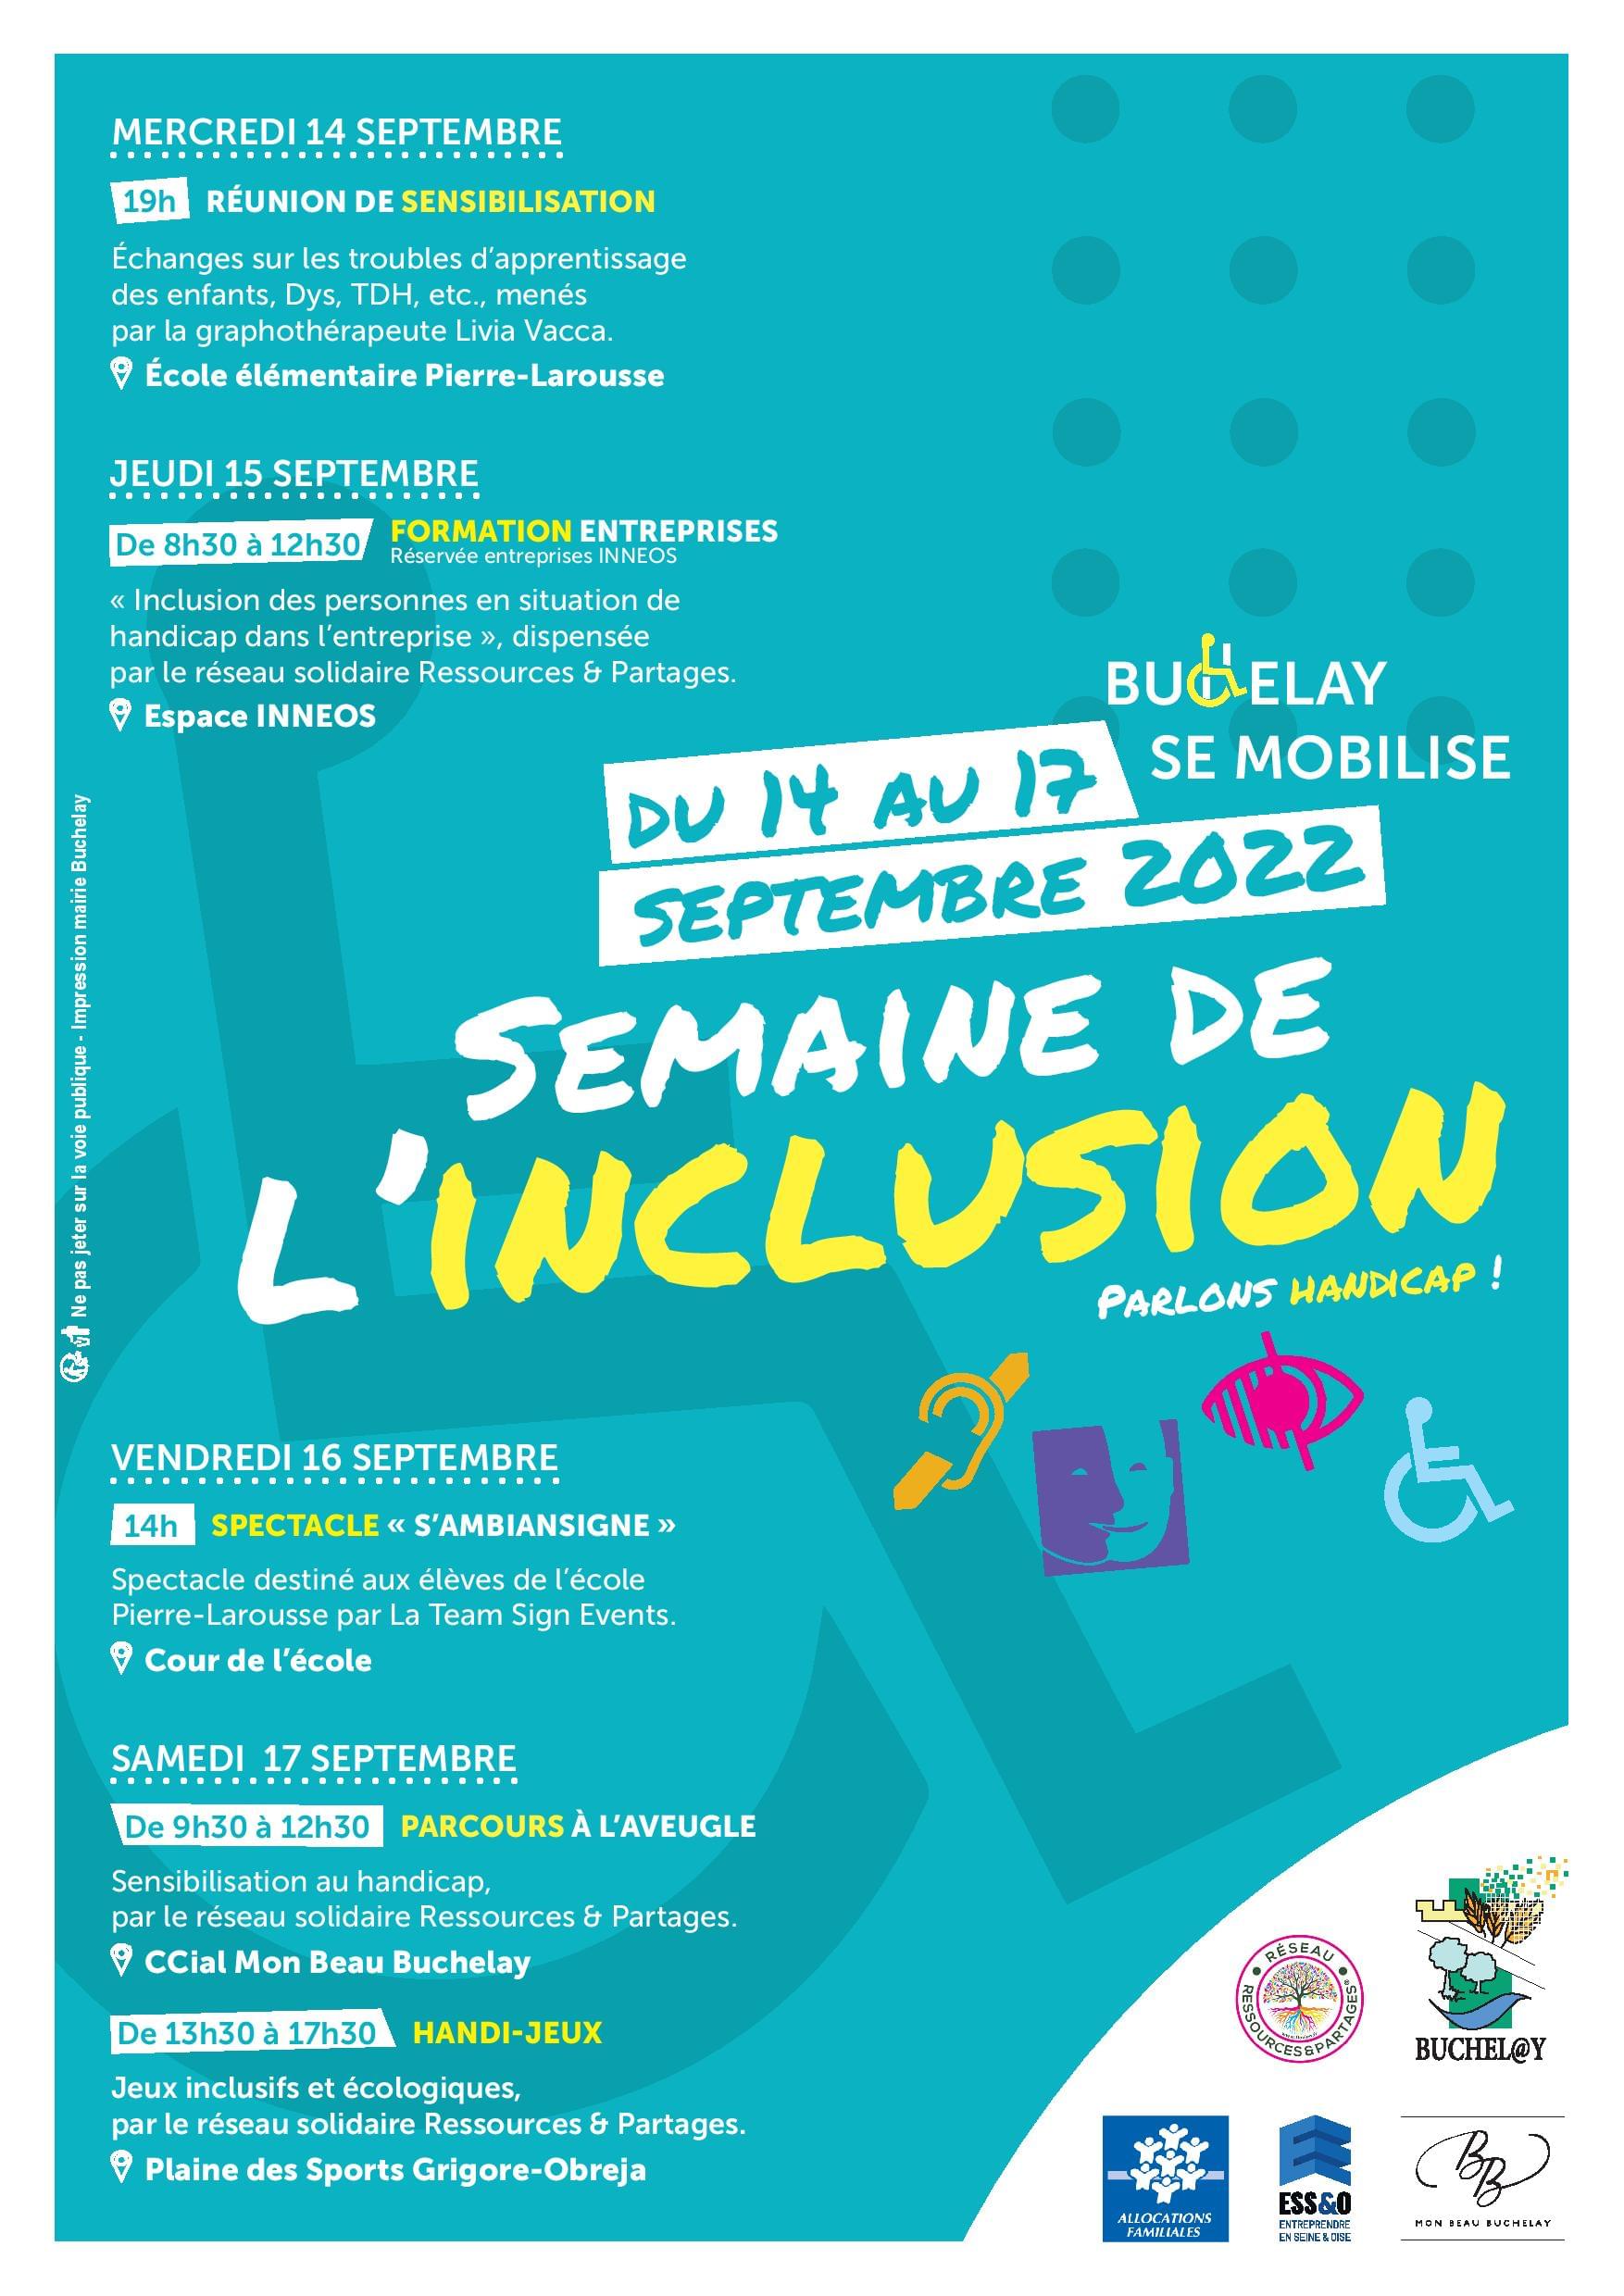 Buchelay Semaine de l inclusion 2022